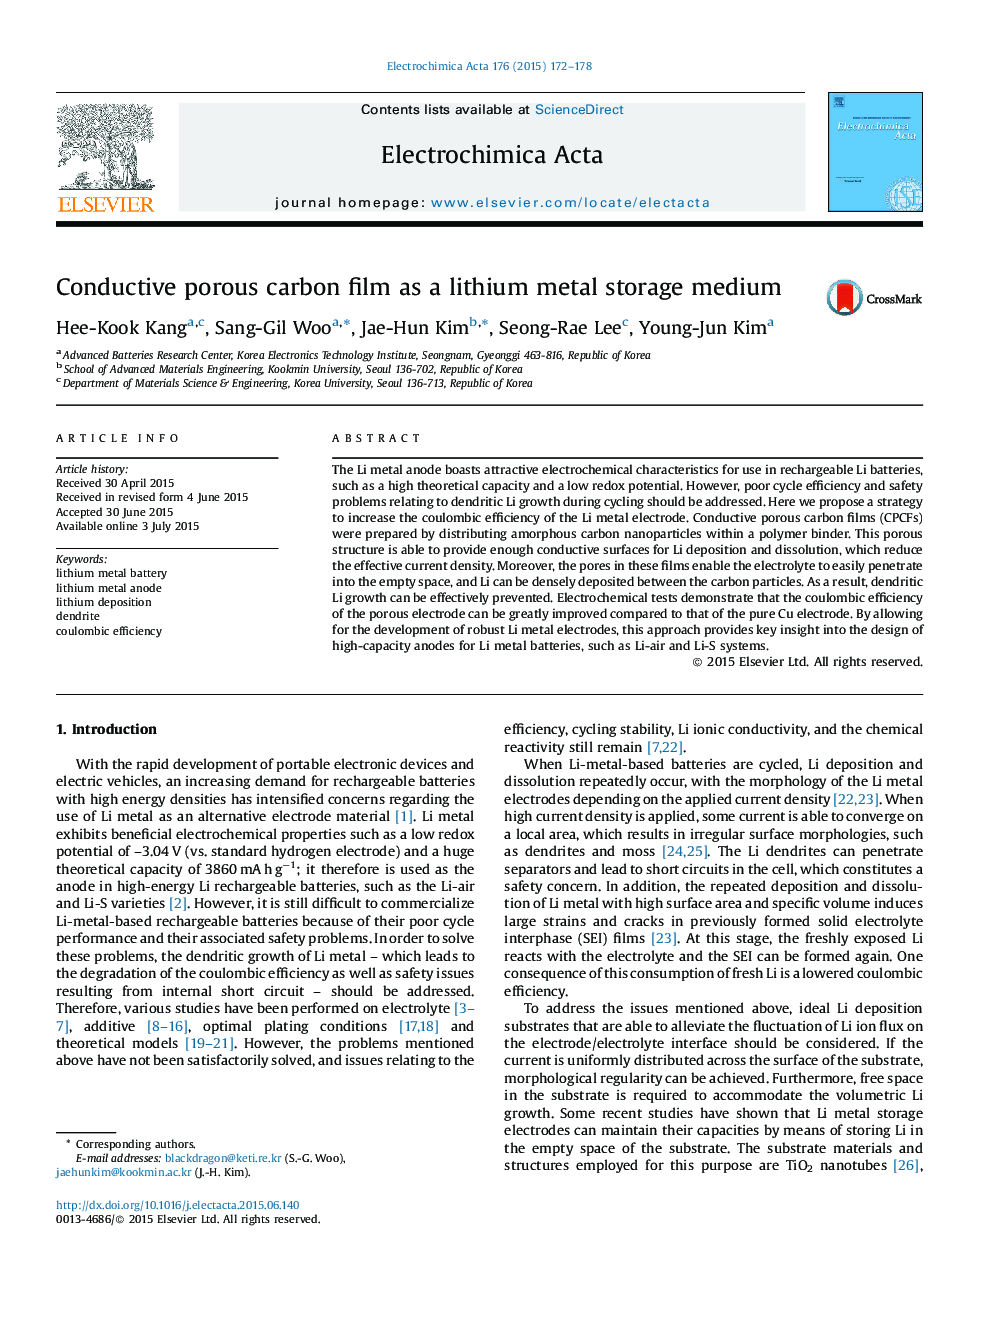 Conductive porous carbon film as a lithium metal storage medium